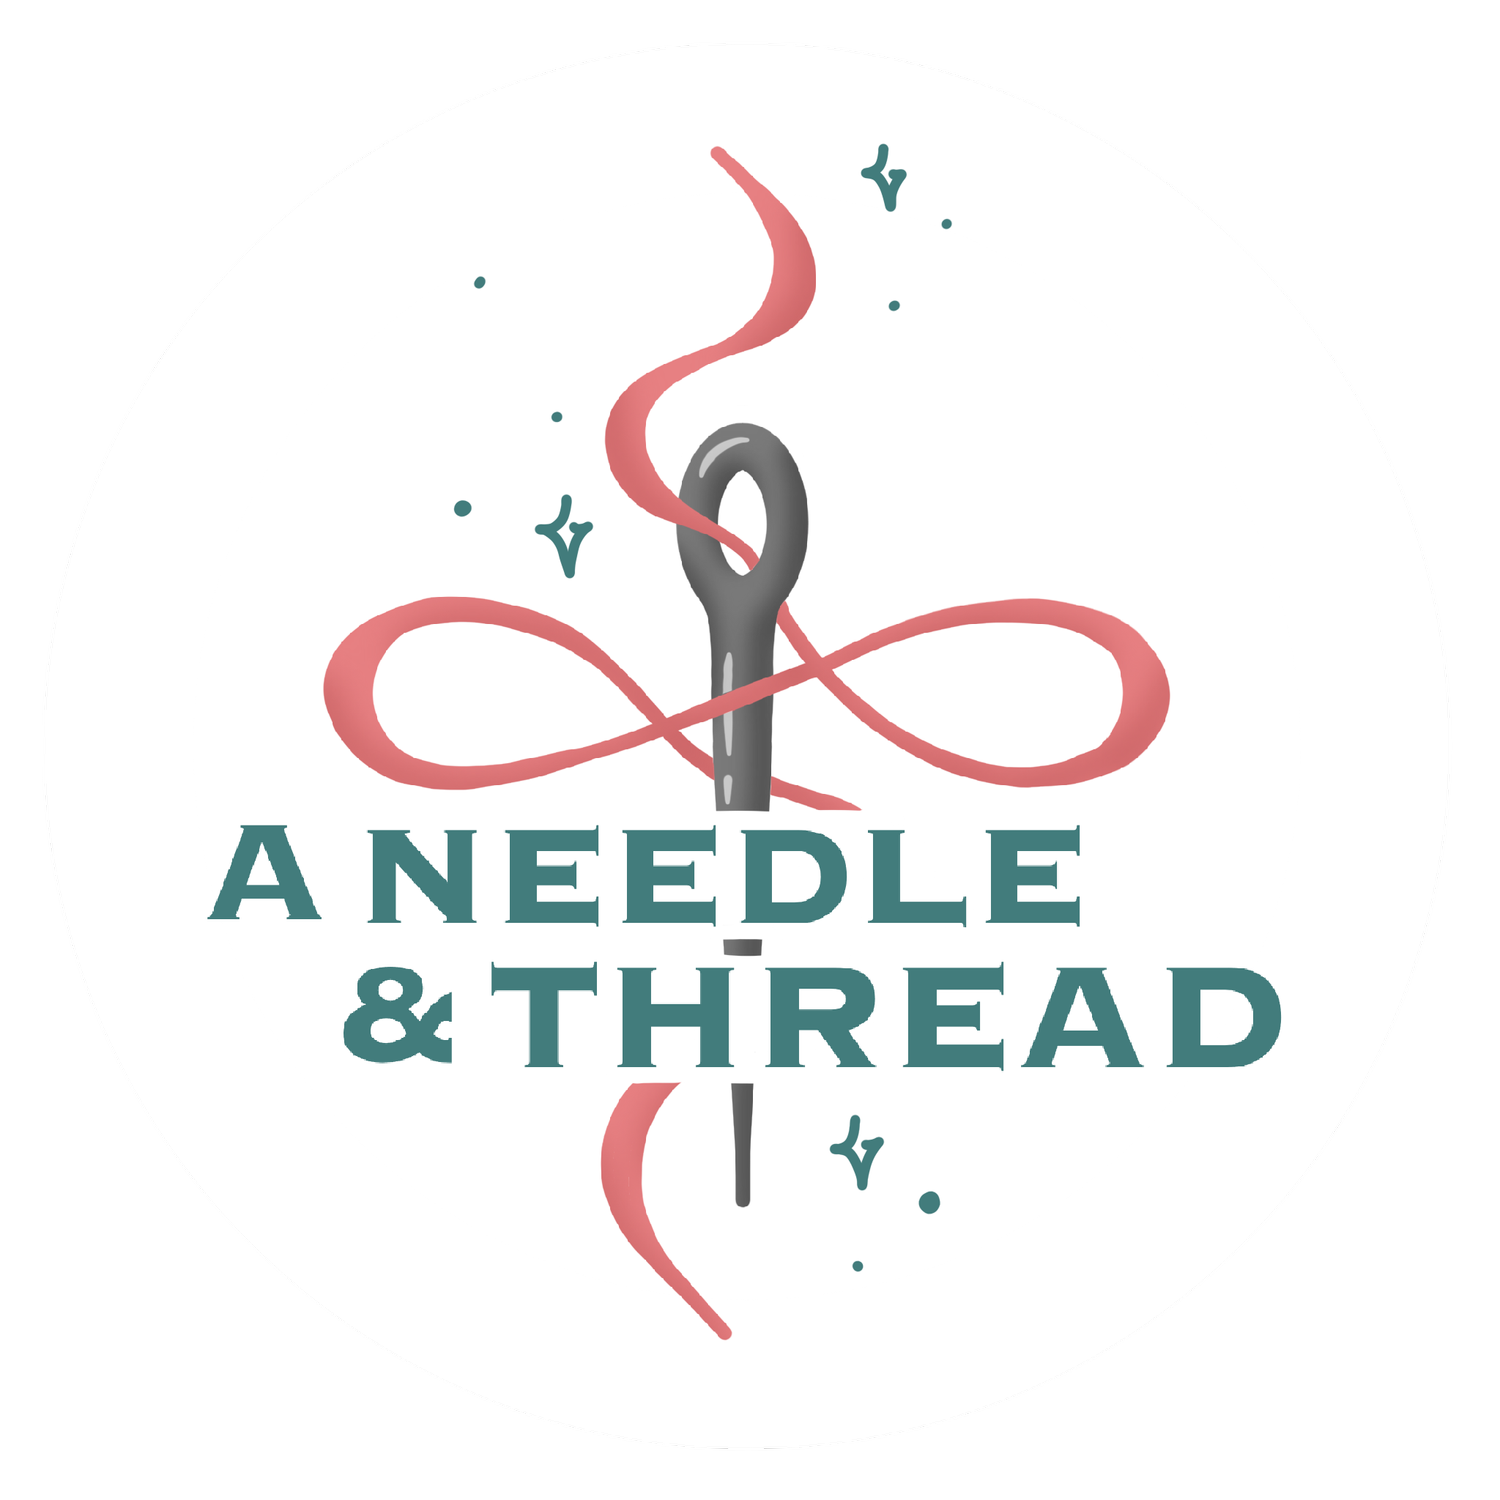 A Needle & Thread